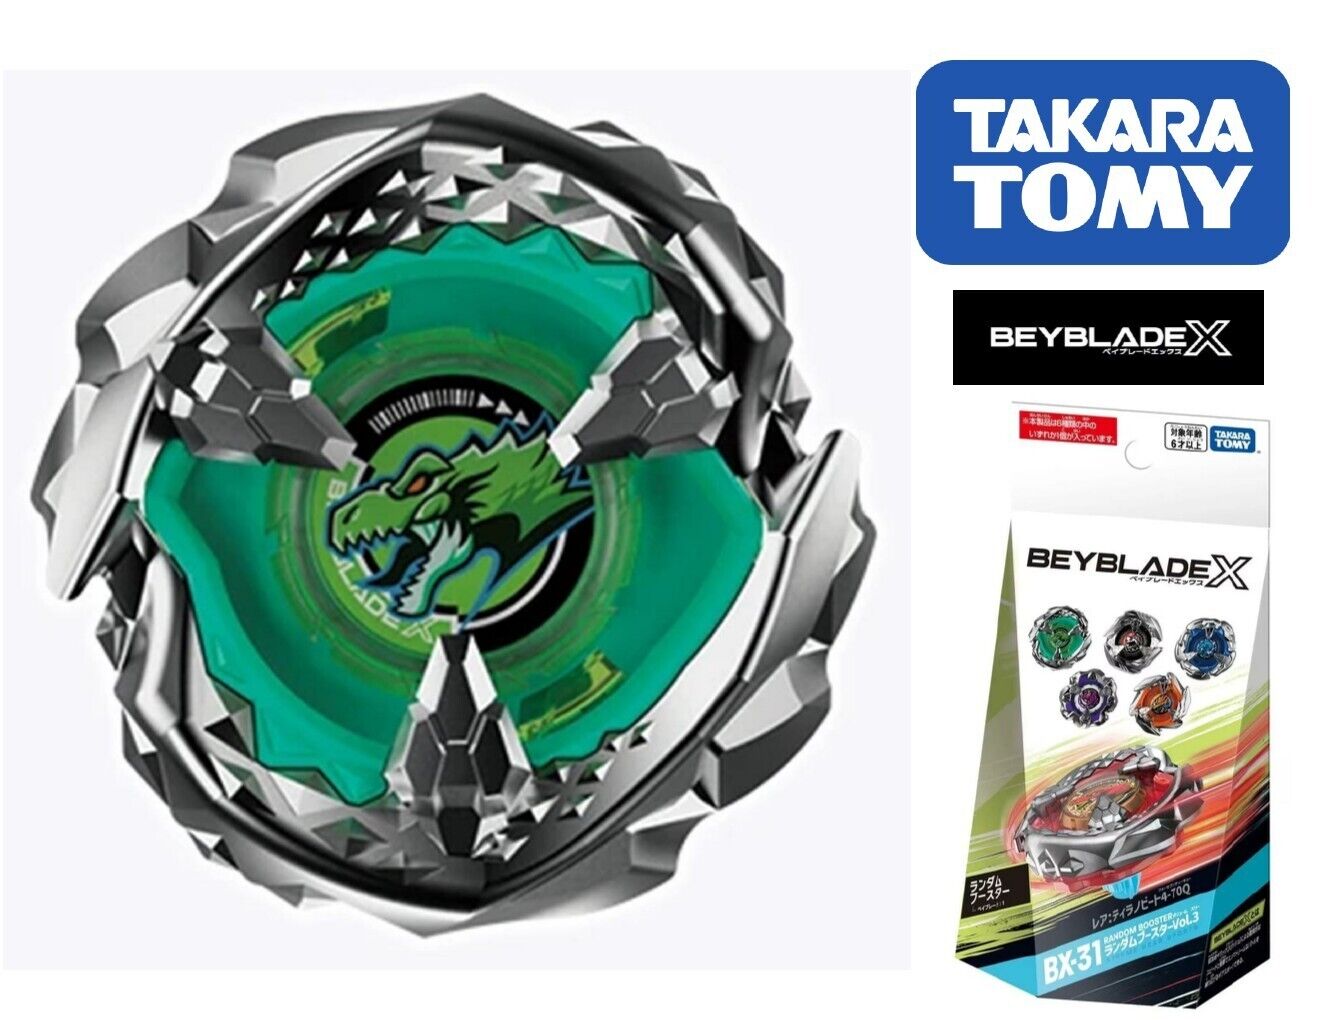 Takara Tomy Beyblade X BX-31 02 Tyranno Beat 3-60S (Japan Import)